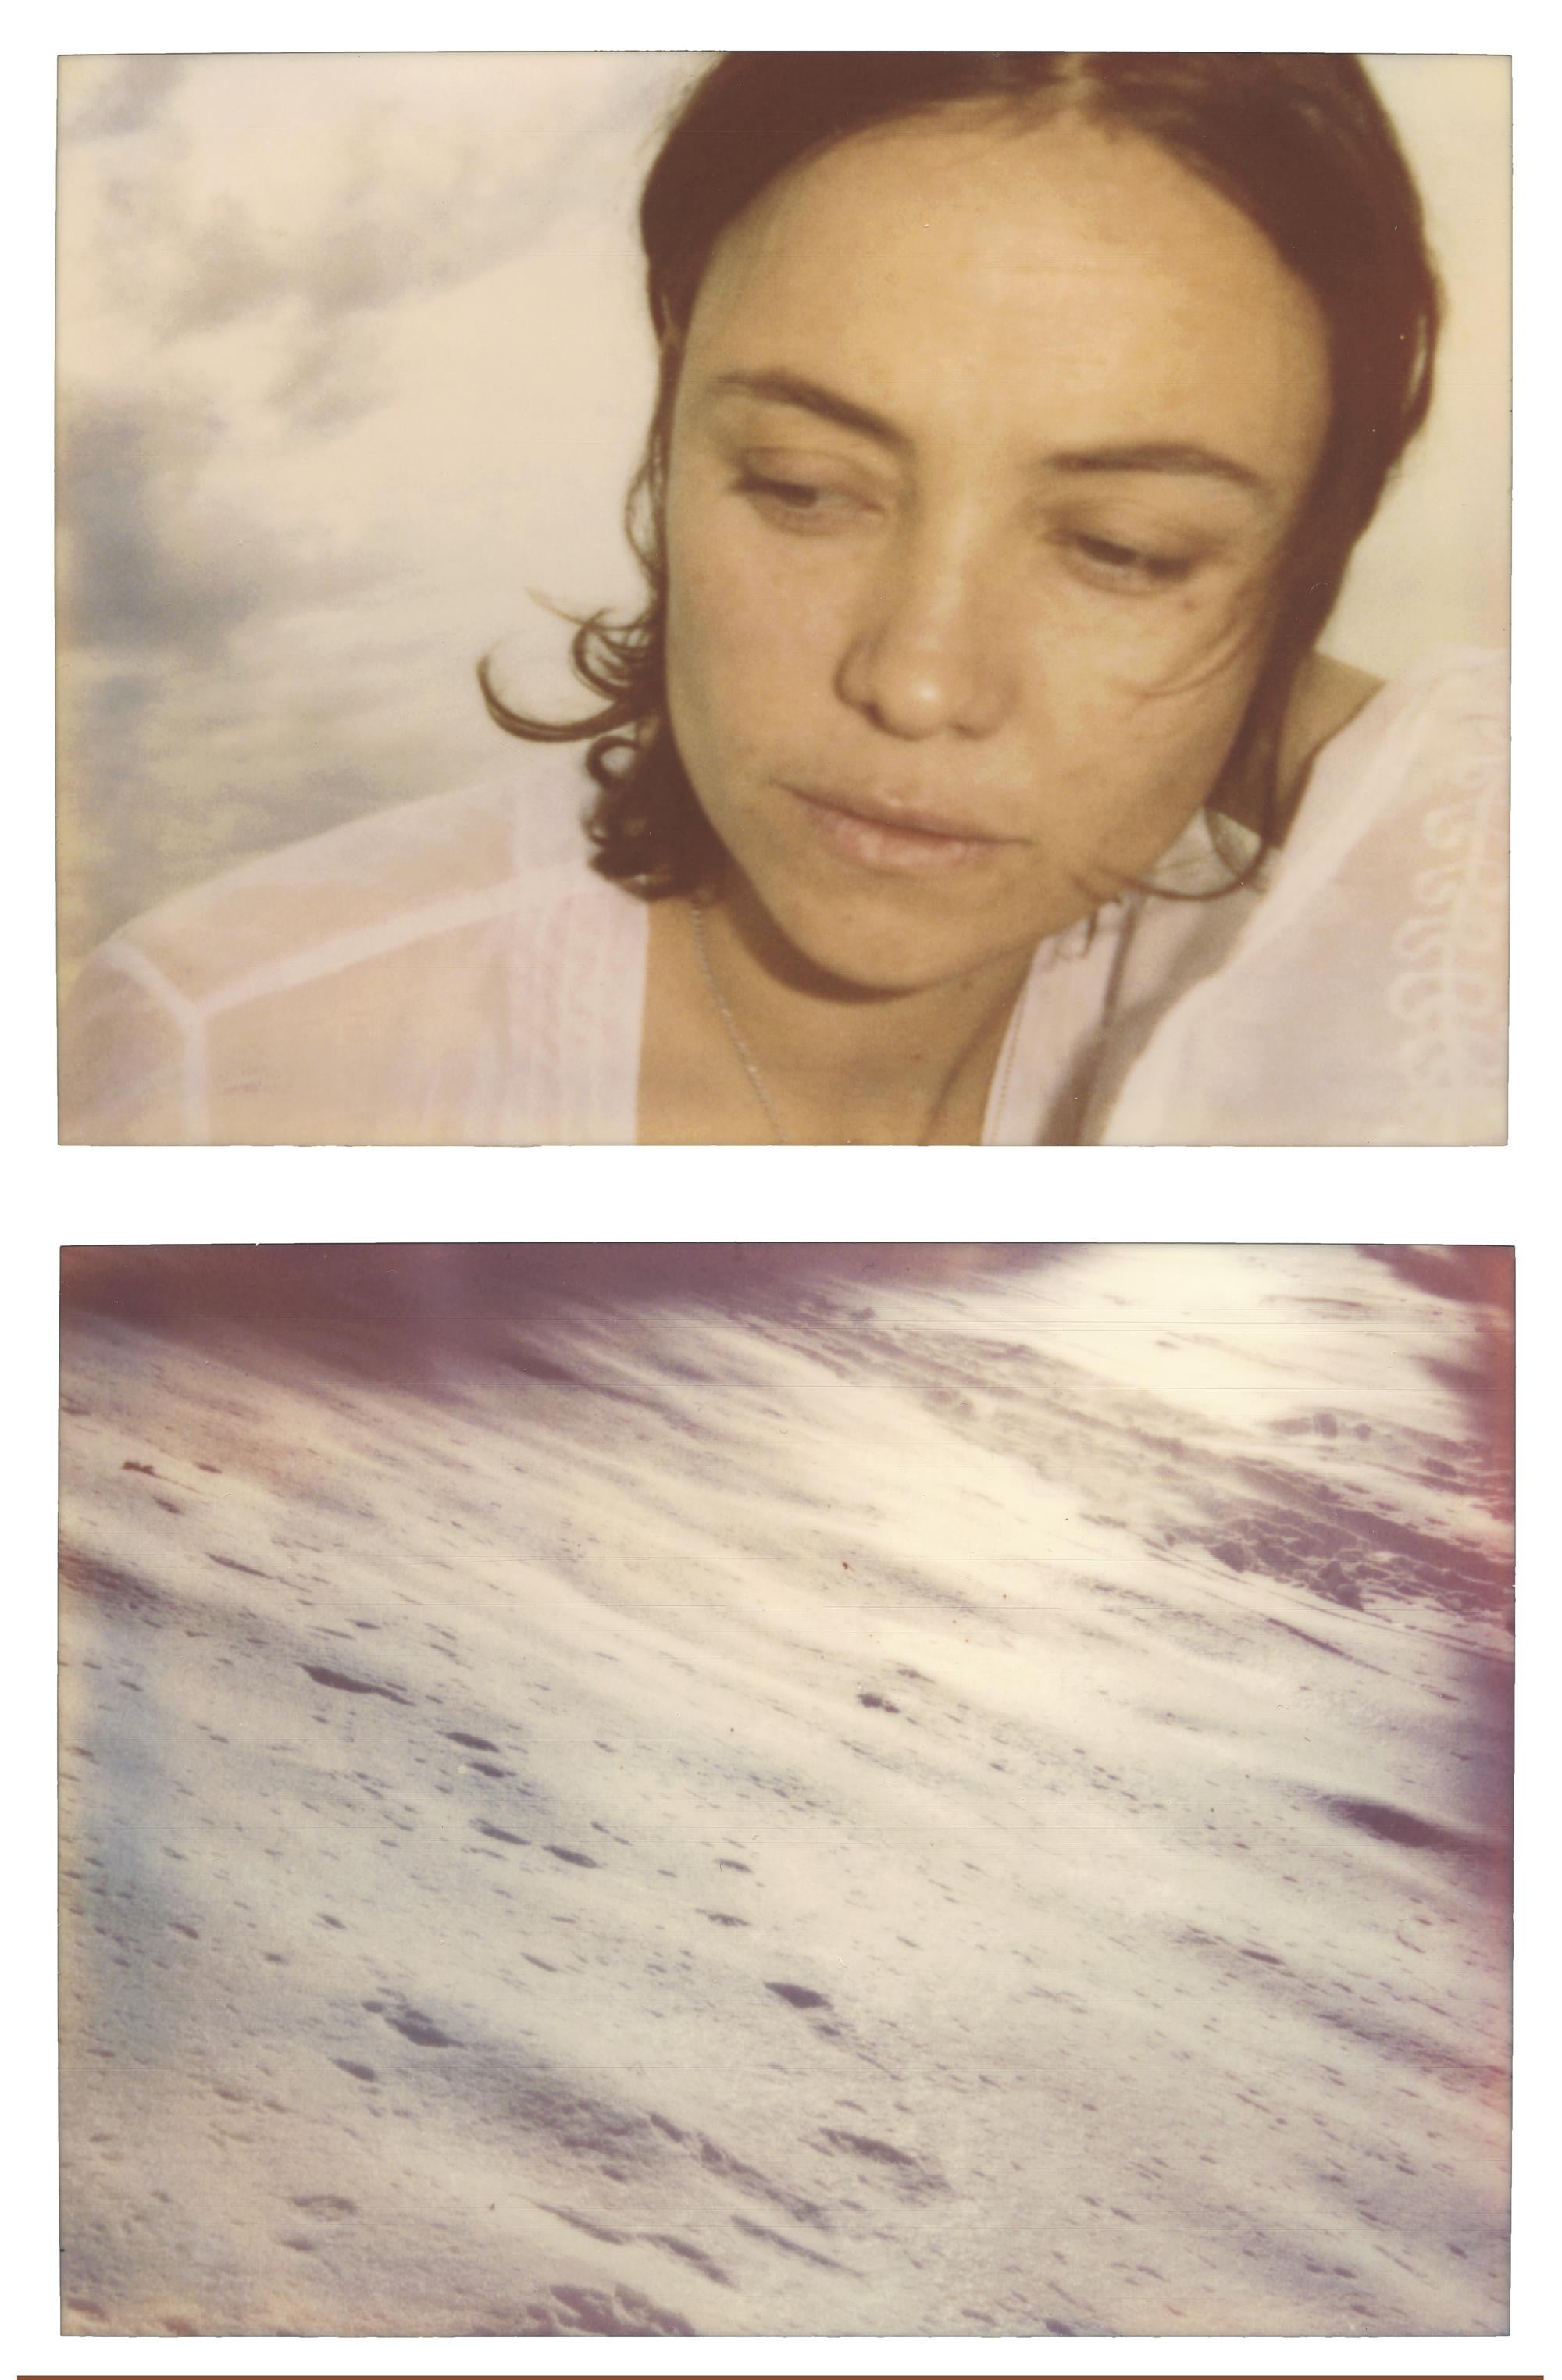 Stefanie Schneider Portrait Photograph - Like a Snowball down a Mountain (Stranger than Paradise) - diptych, analog